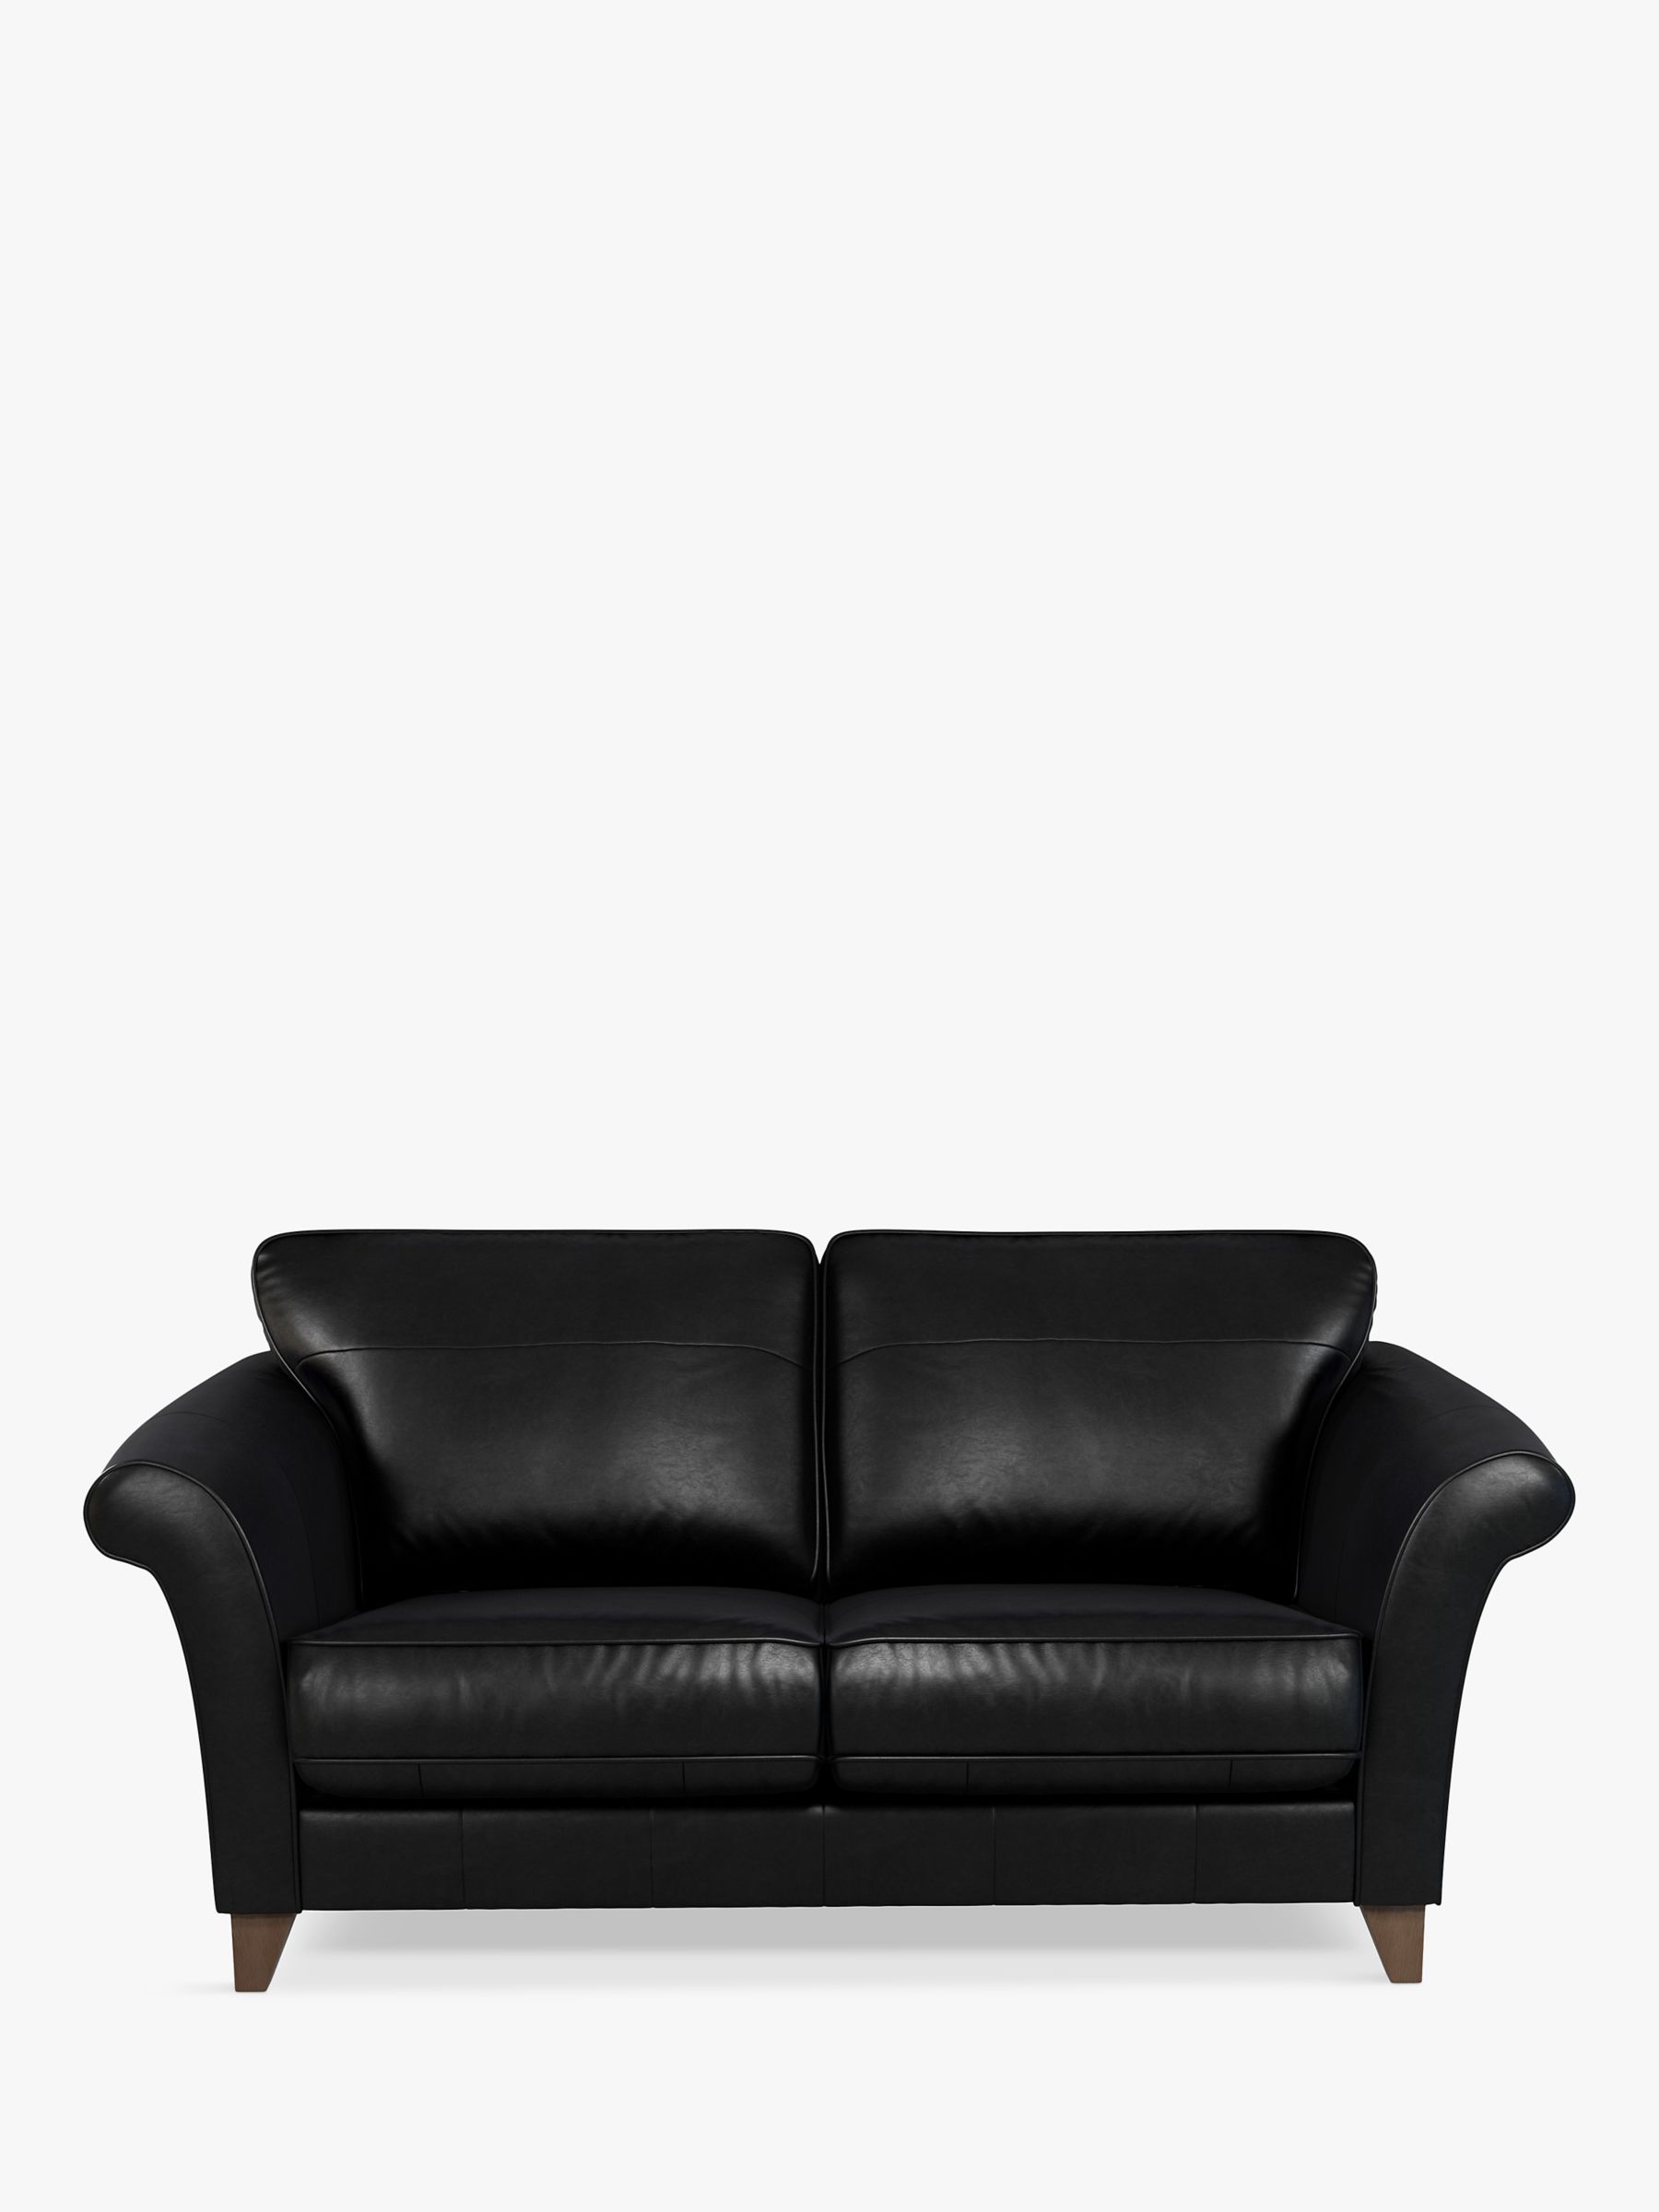 Charlotte Range, John Lewis Charlotte Large 3 Seater Leather Sofa, Dark Leg, Piccadilly Black